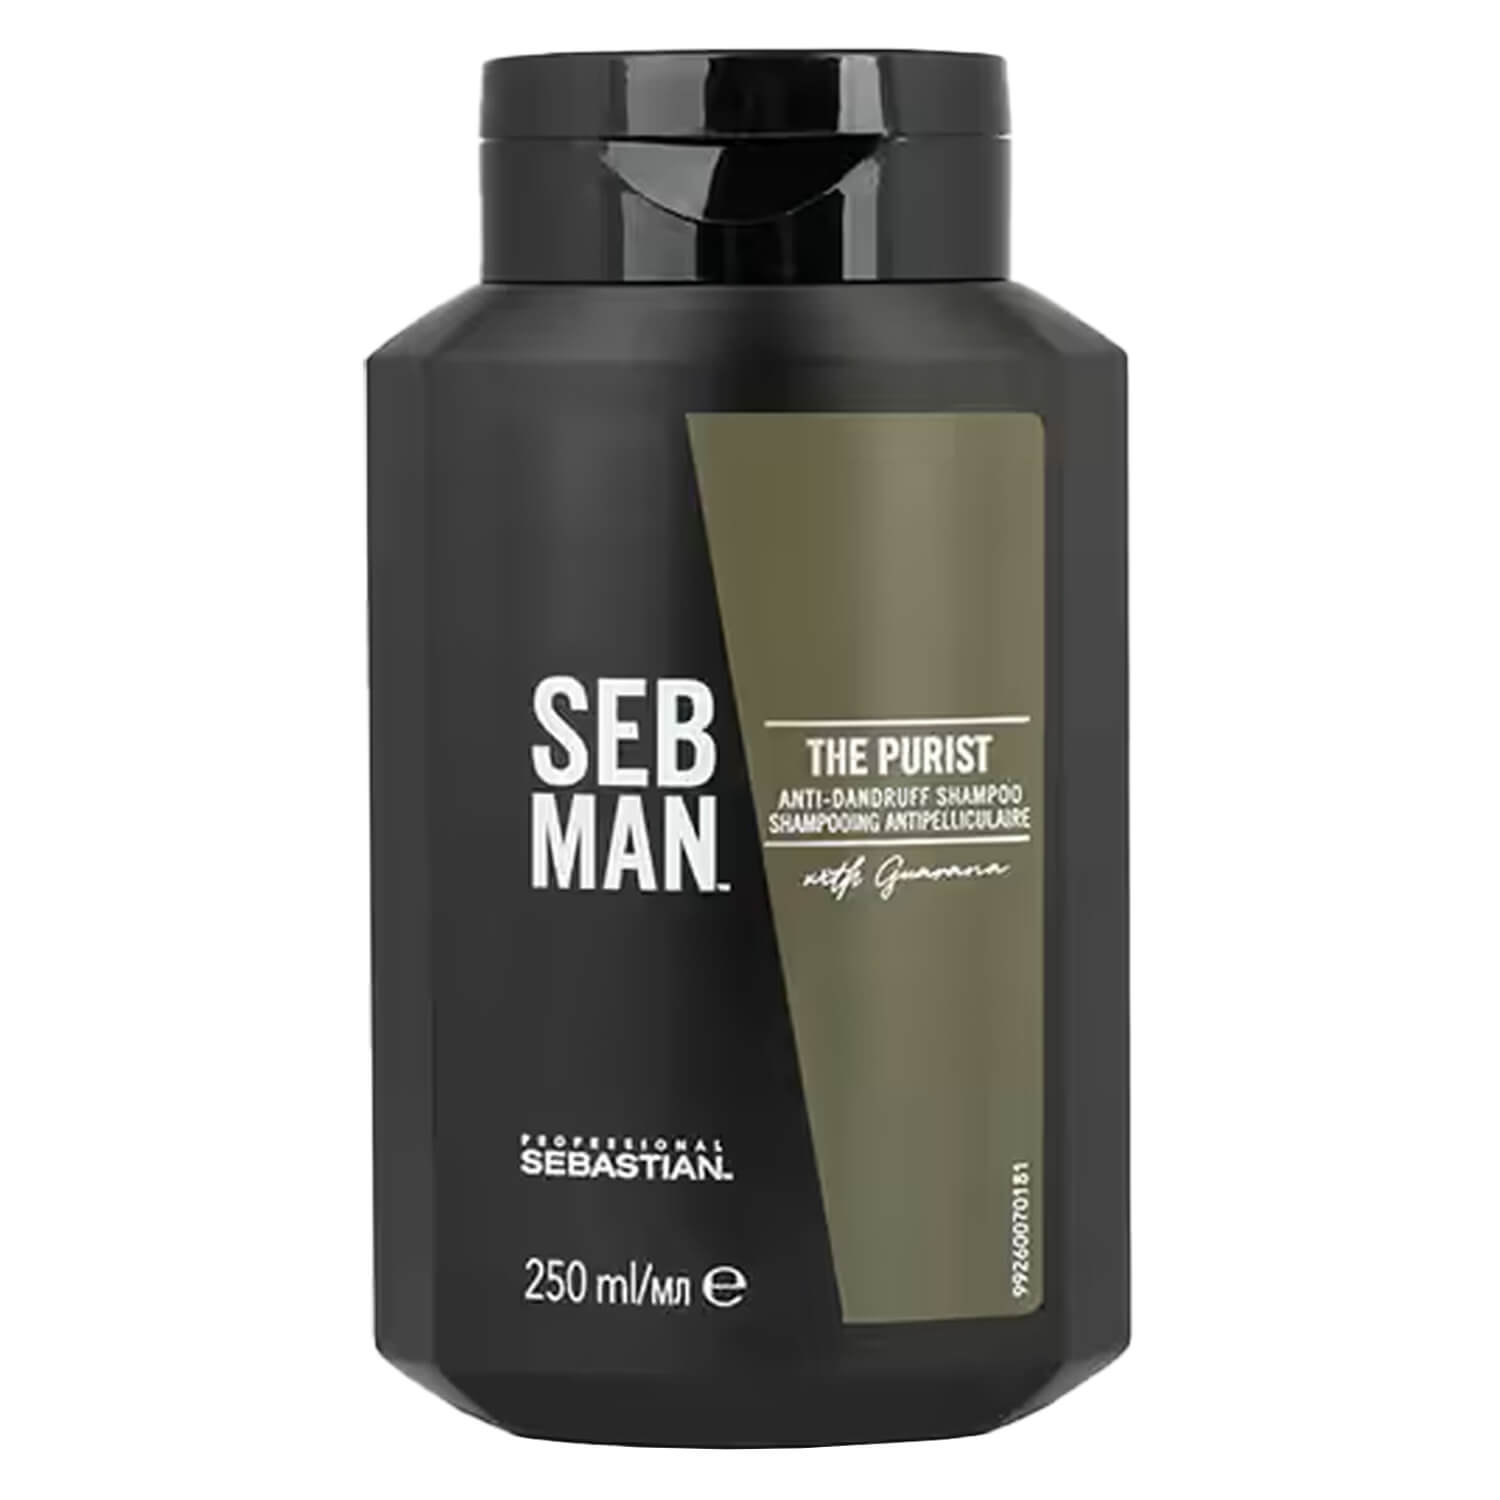 Product image from SEB MAN - The Purist Anti-Dandruff Shampoo